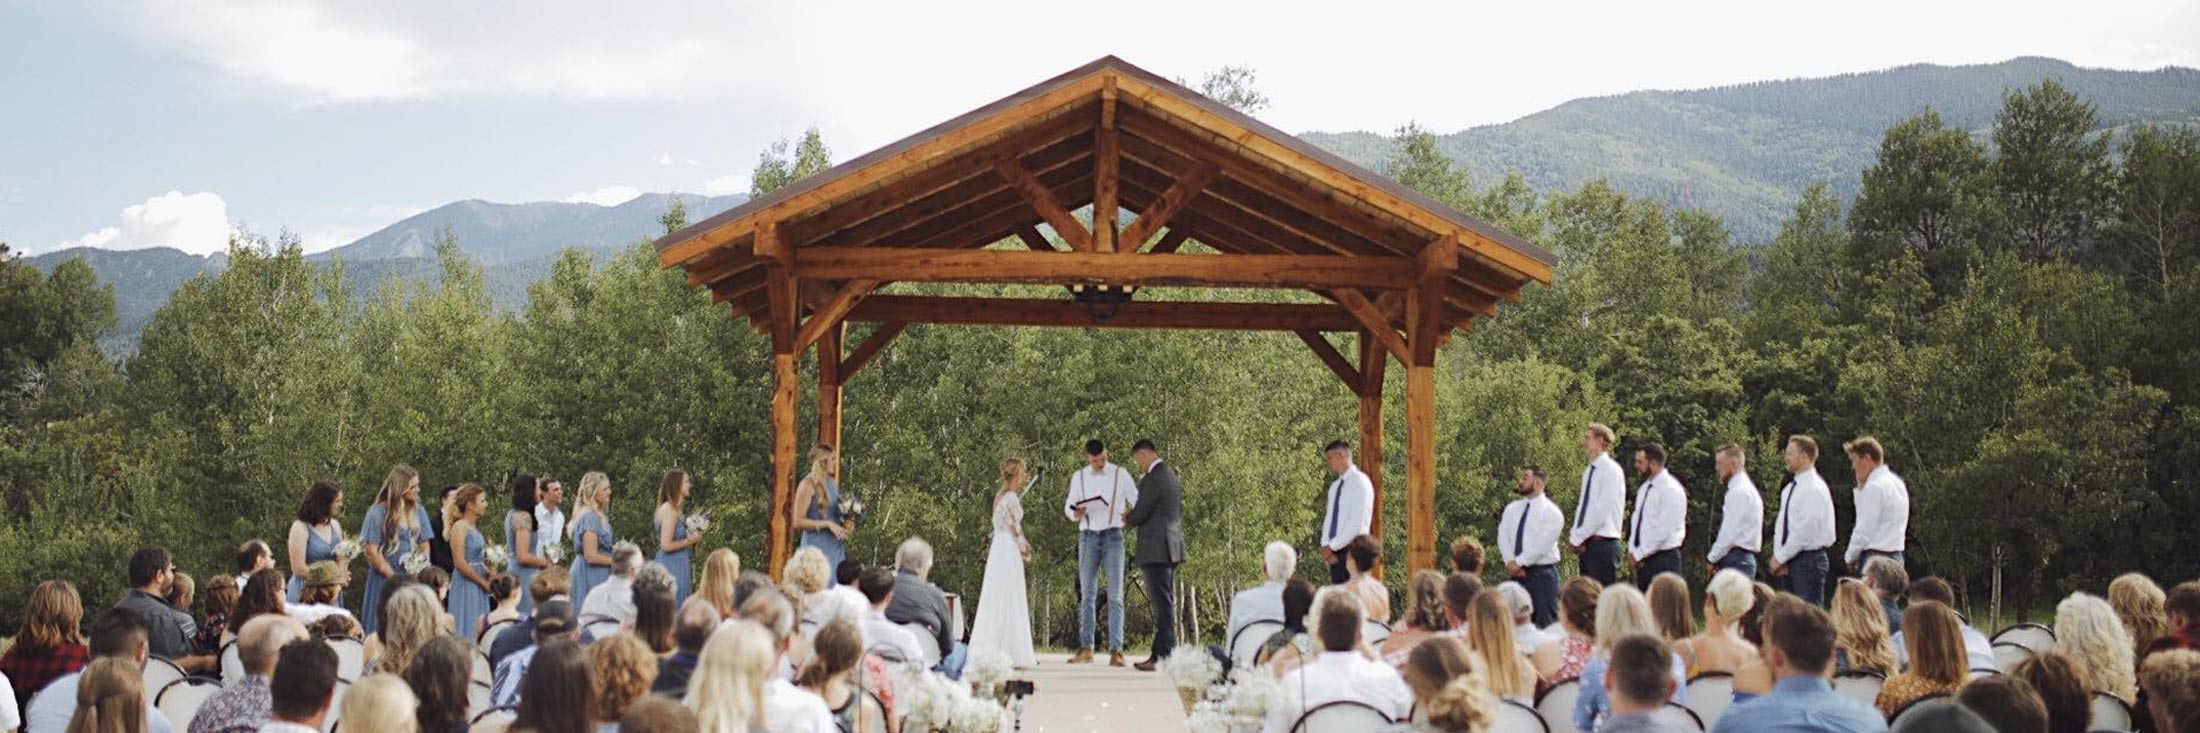 Colorado Mountain Ranch Barn Wedding Venue